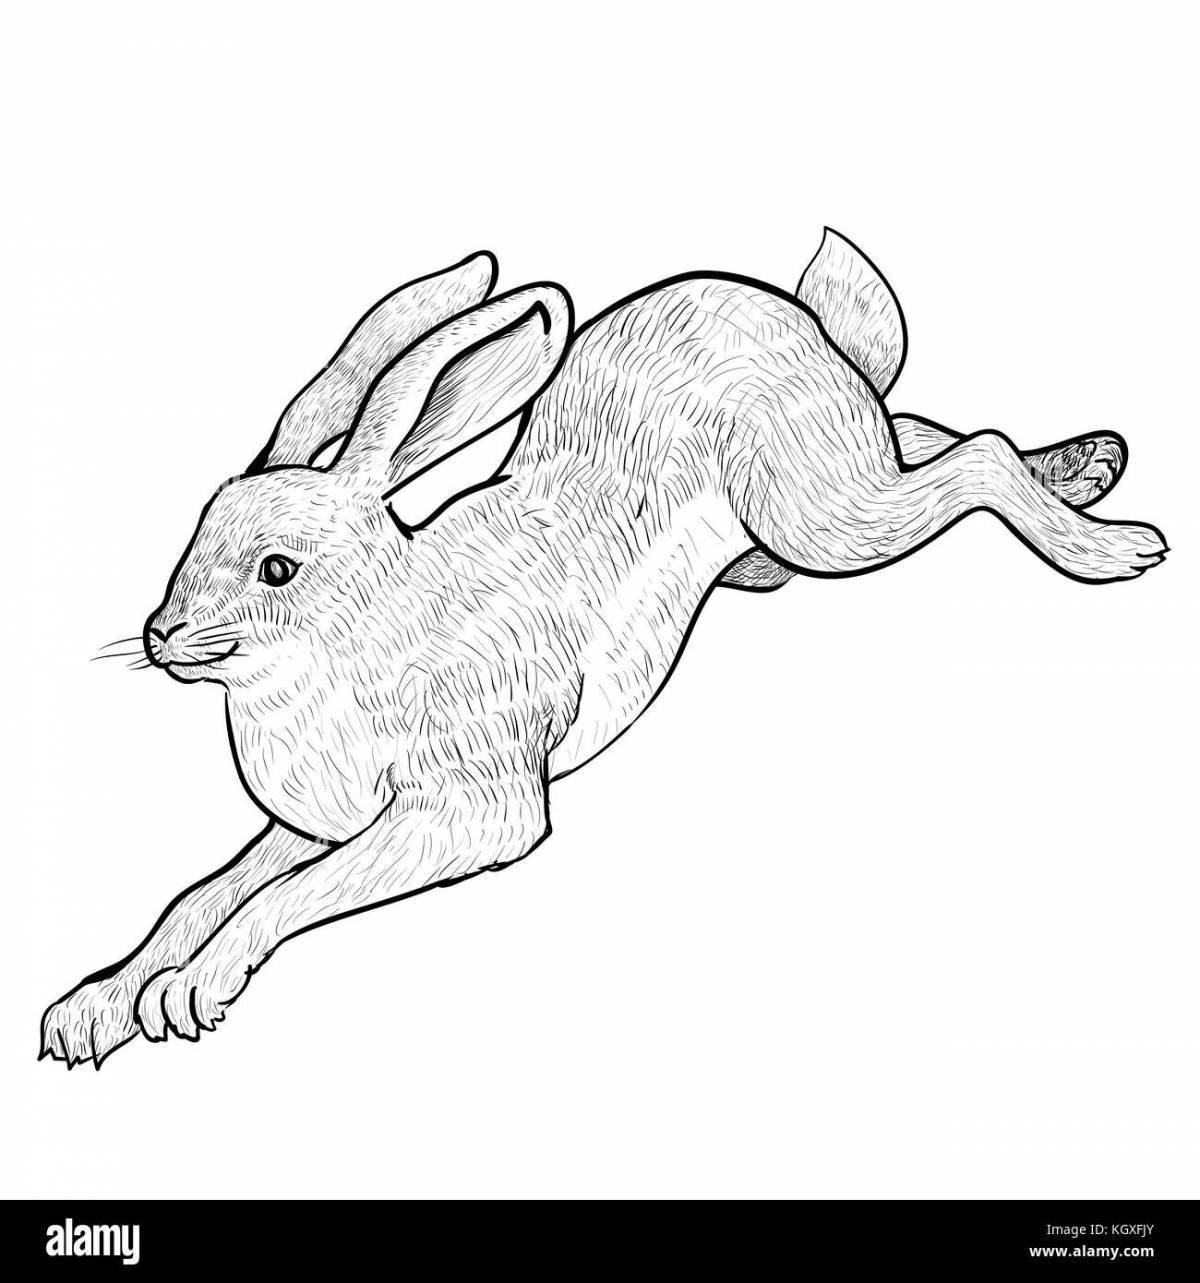 Раскраска изысканный бегущий заяц